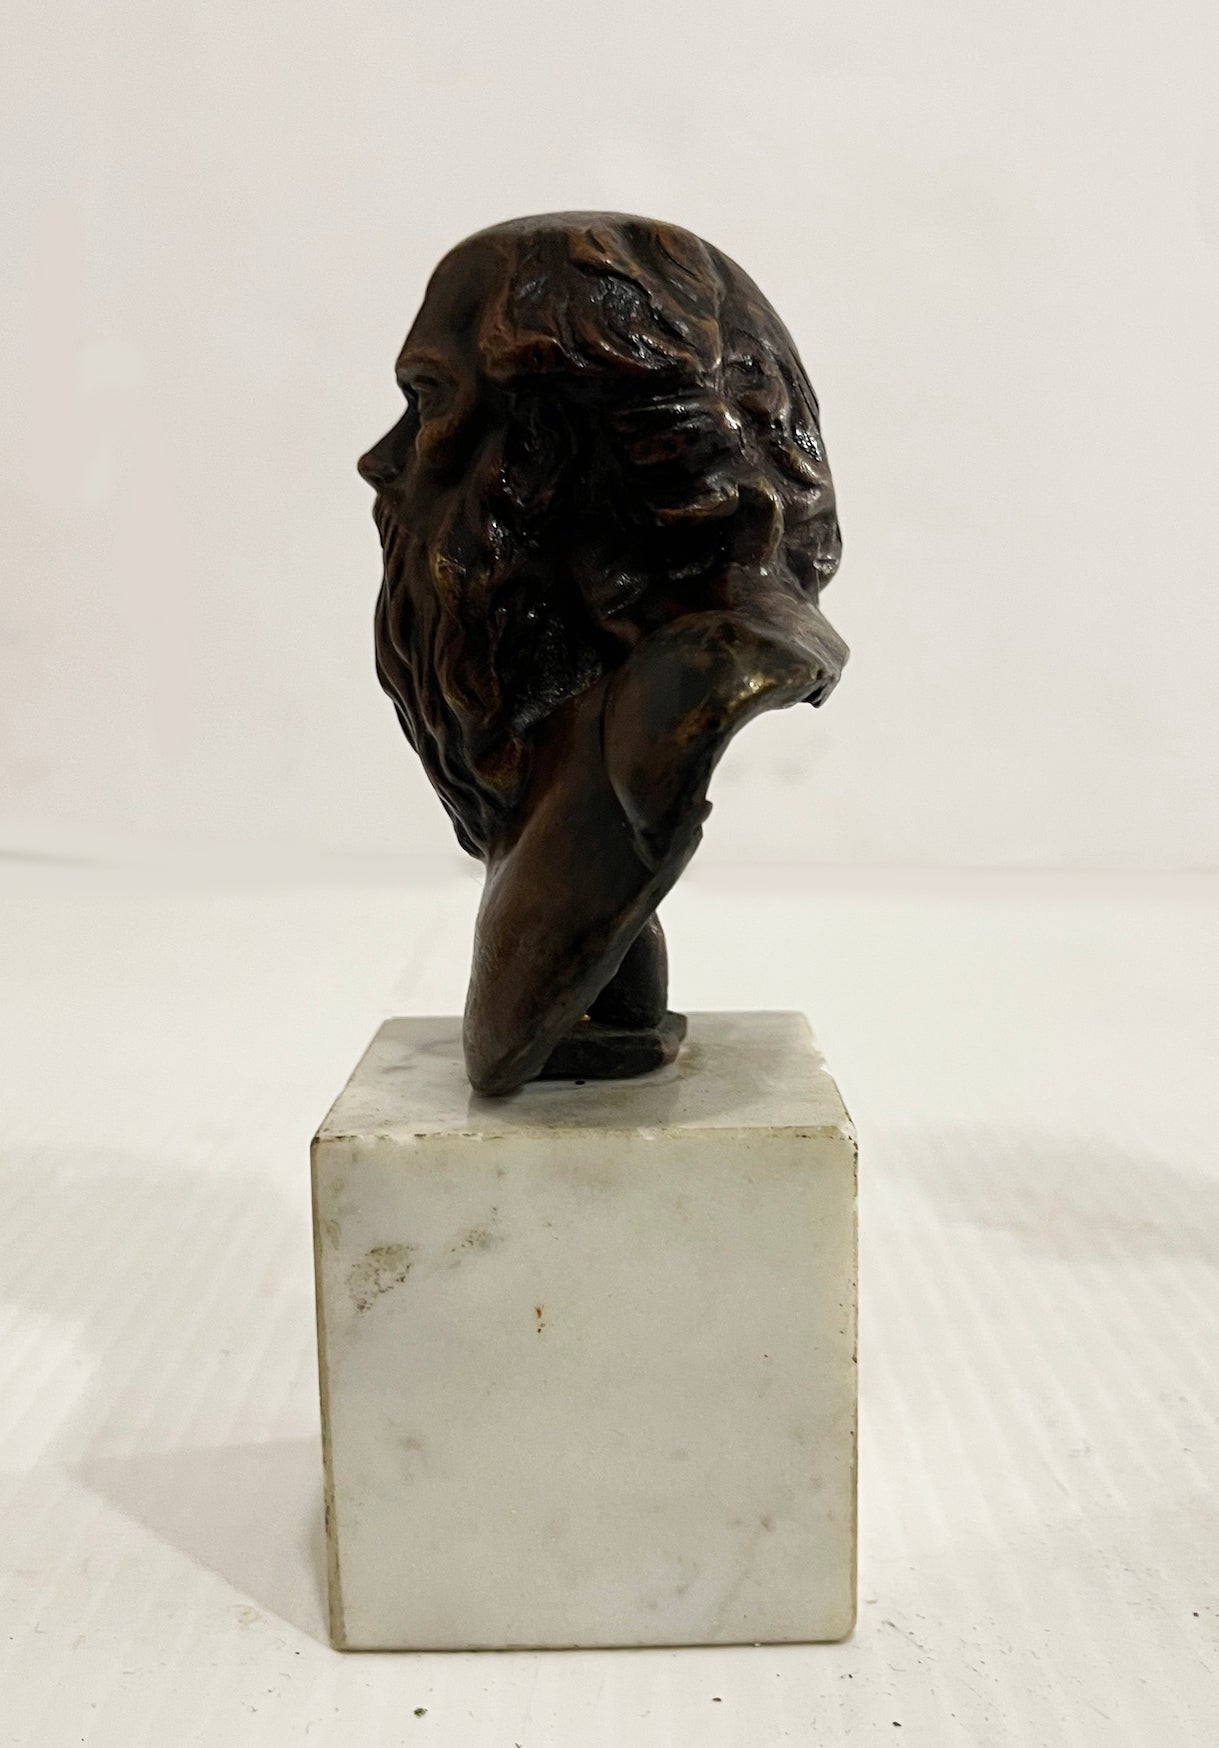 Set of 2 Unsigned Bronze Sculptures: Pair of Miniature Bust of 2 Men